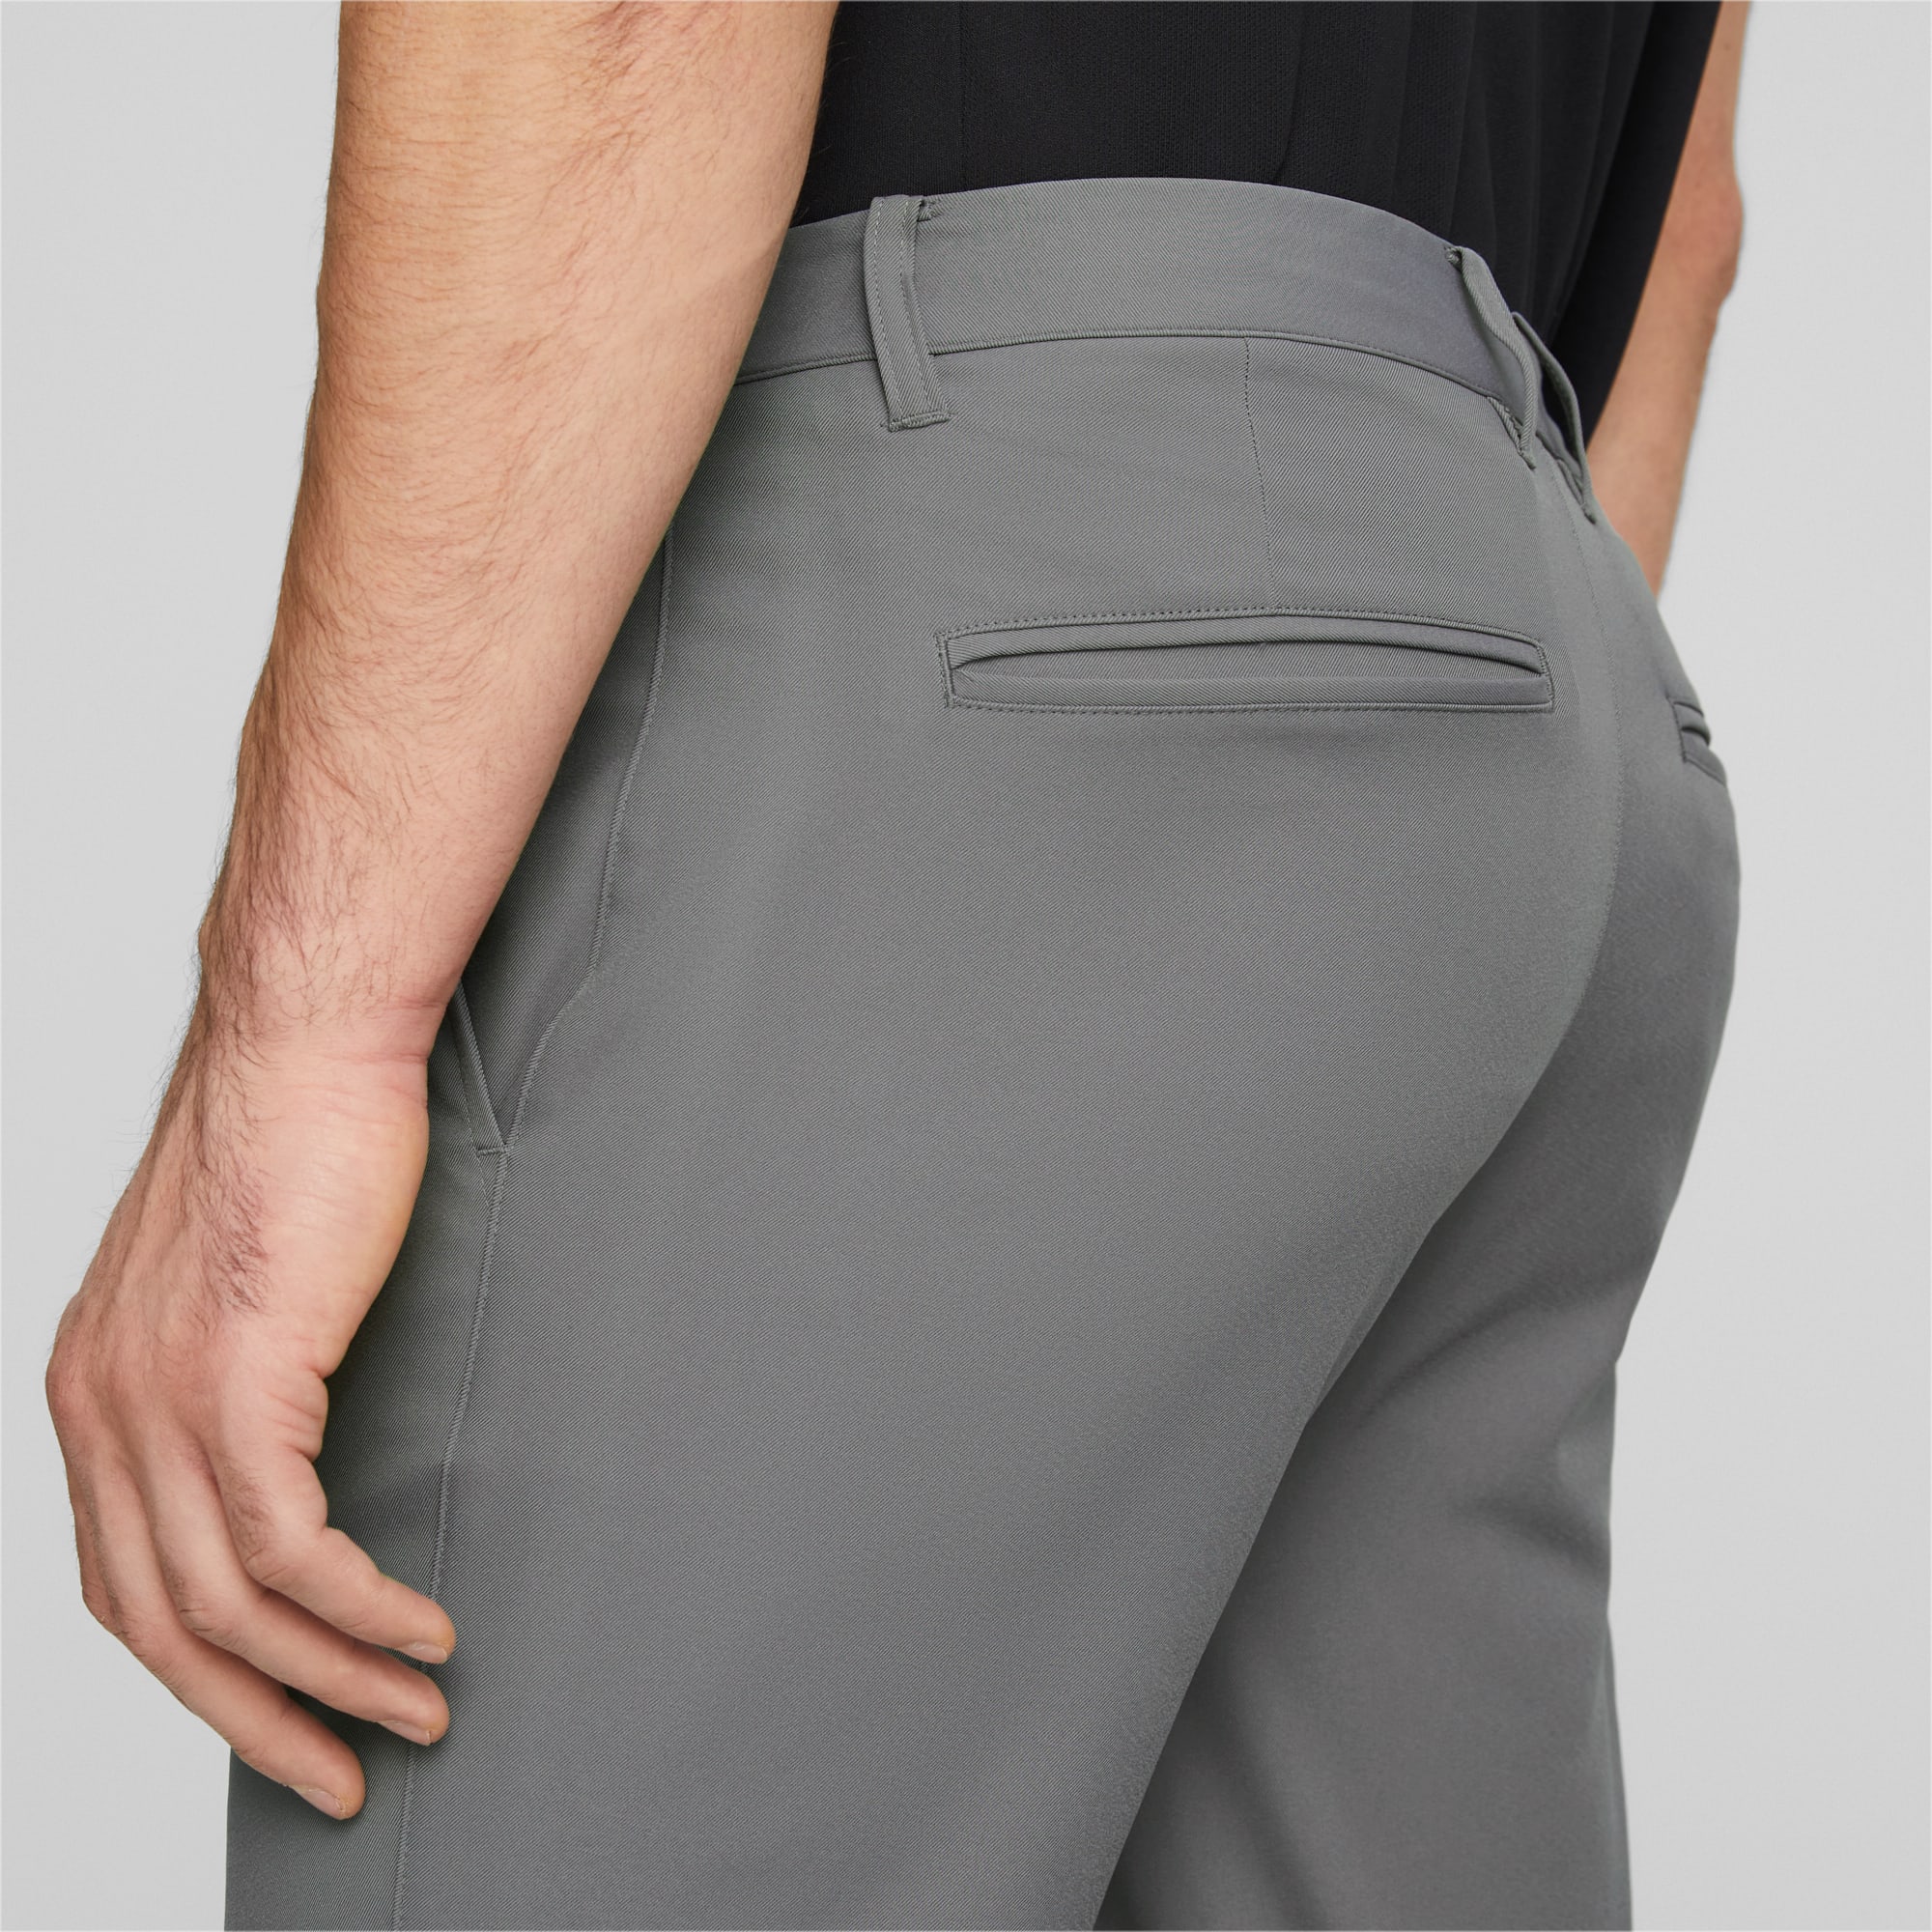 PUMA Dealer Tailored Golf Pants Men, Slate Sky, Size 34/34, Clothing